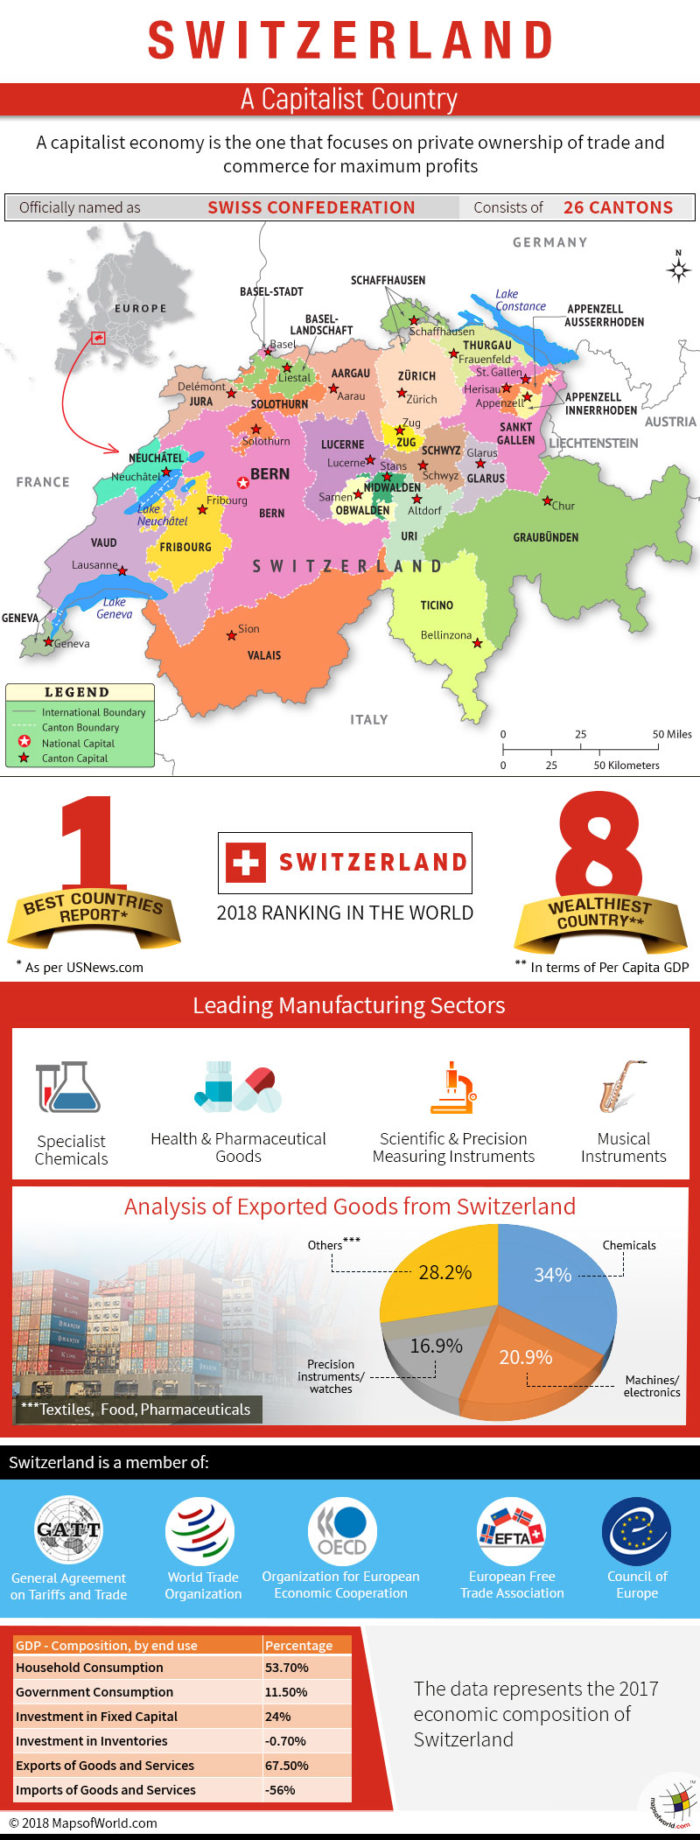 Infographic and map on Switzerland Economy